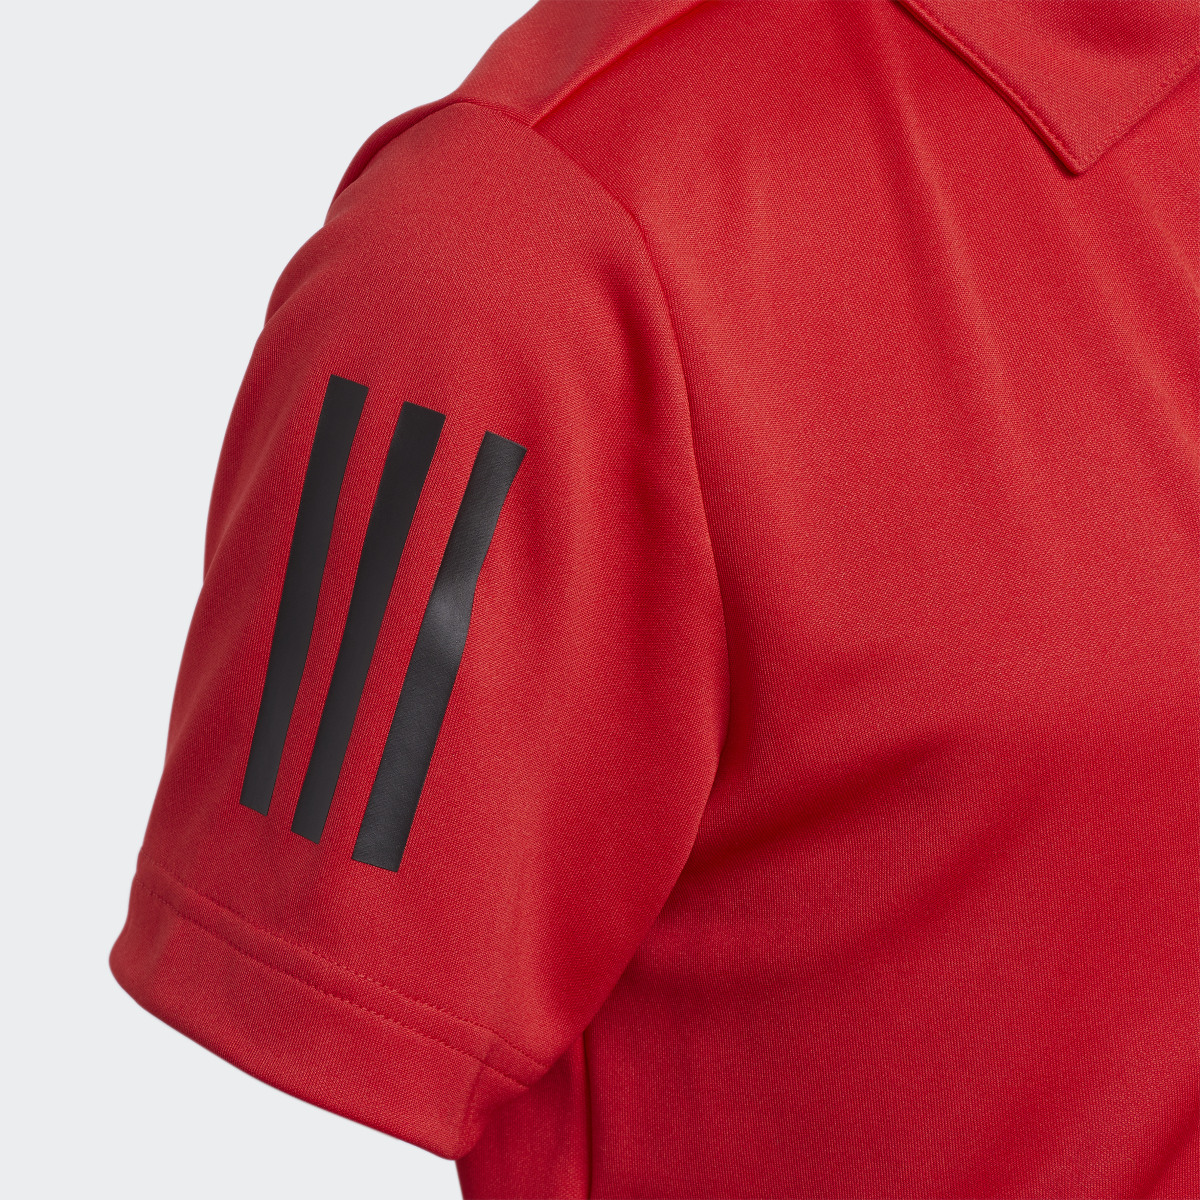 Adidas 3-Stripes Golf Polo Shirt. 4